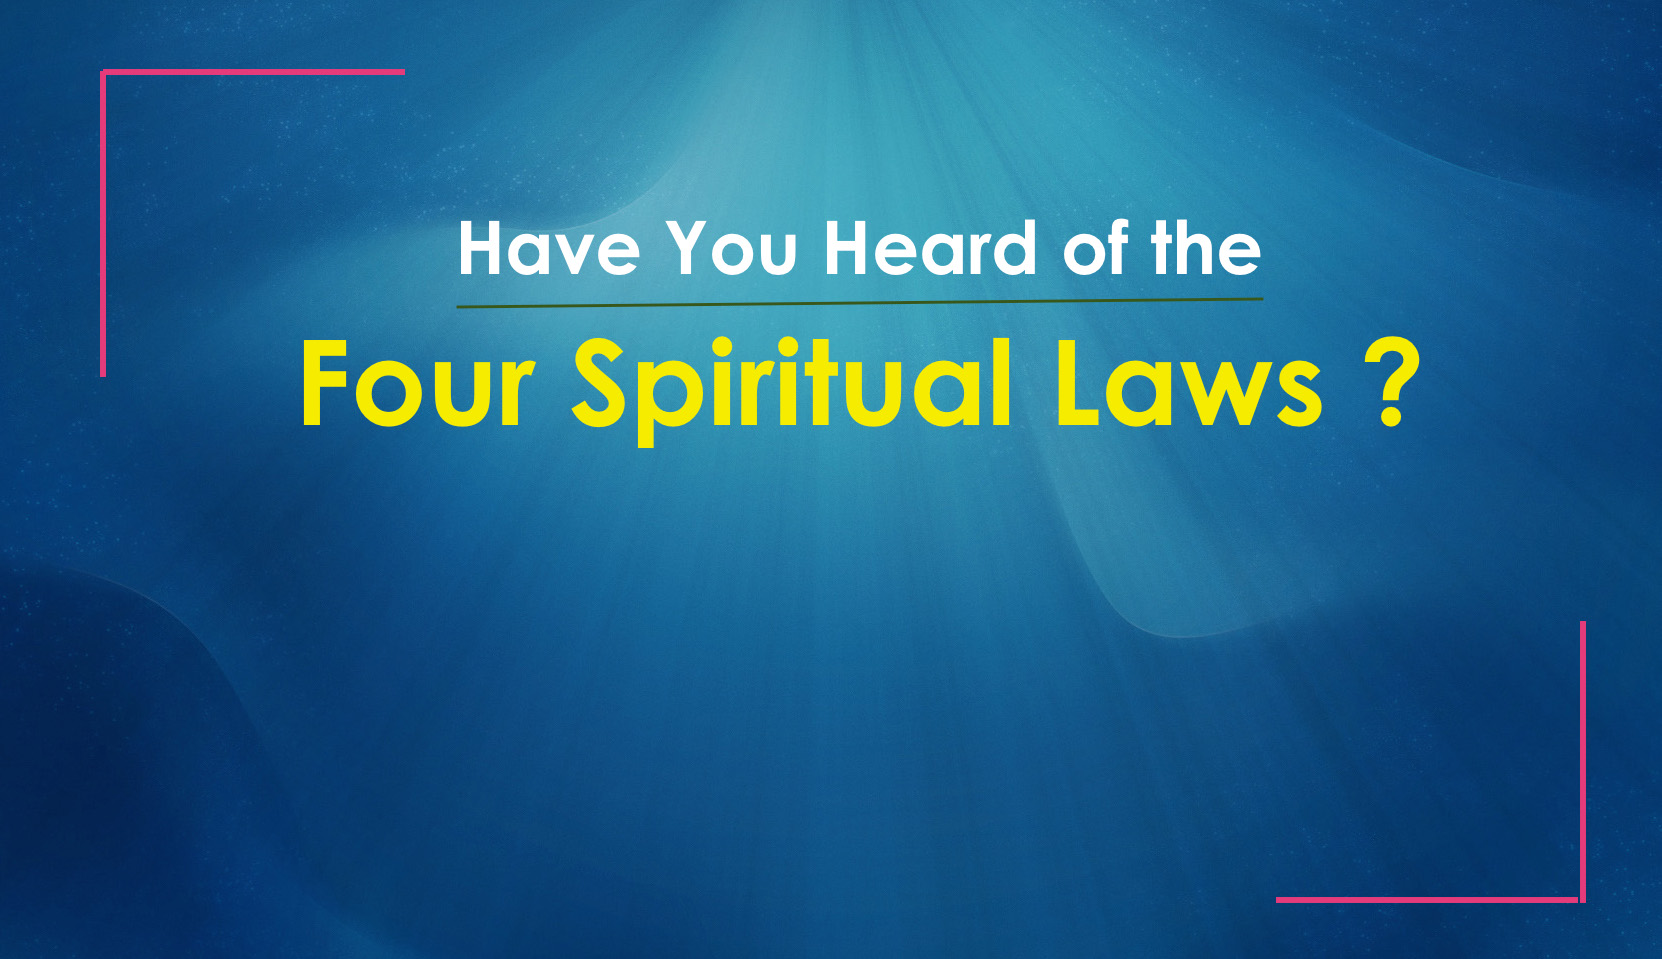 The Four Spiritual Laws